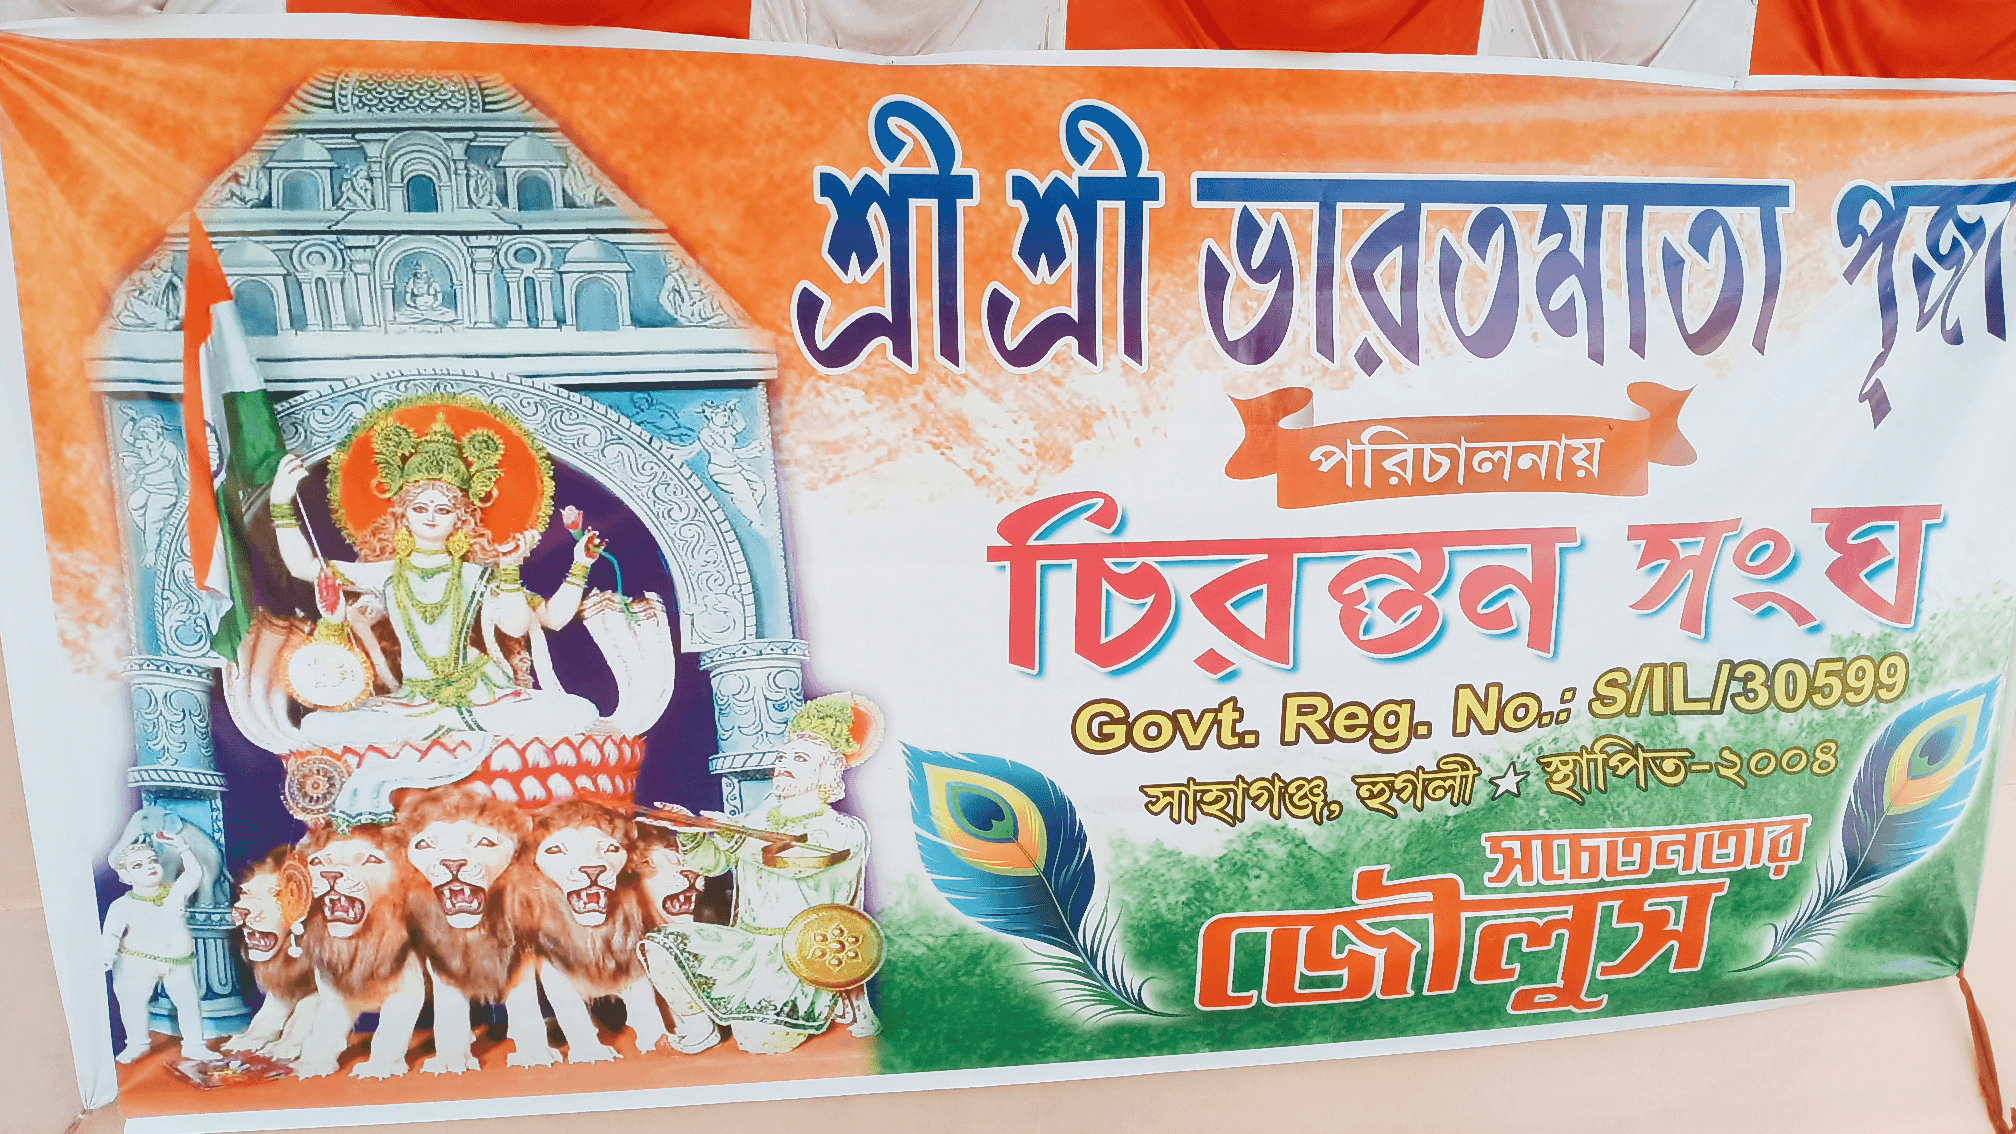 Chirantan Sangha Bharat Mata puja committee-cover